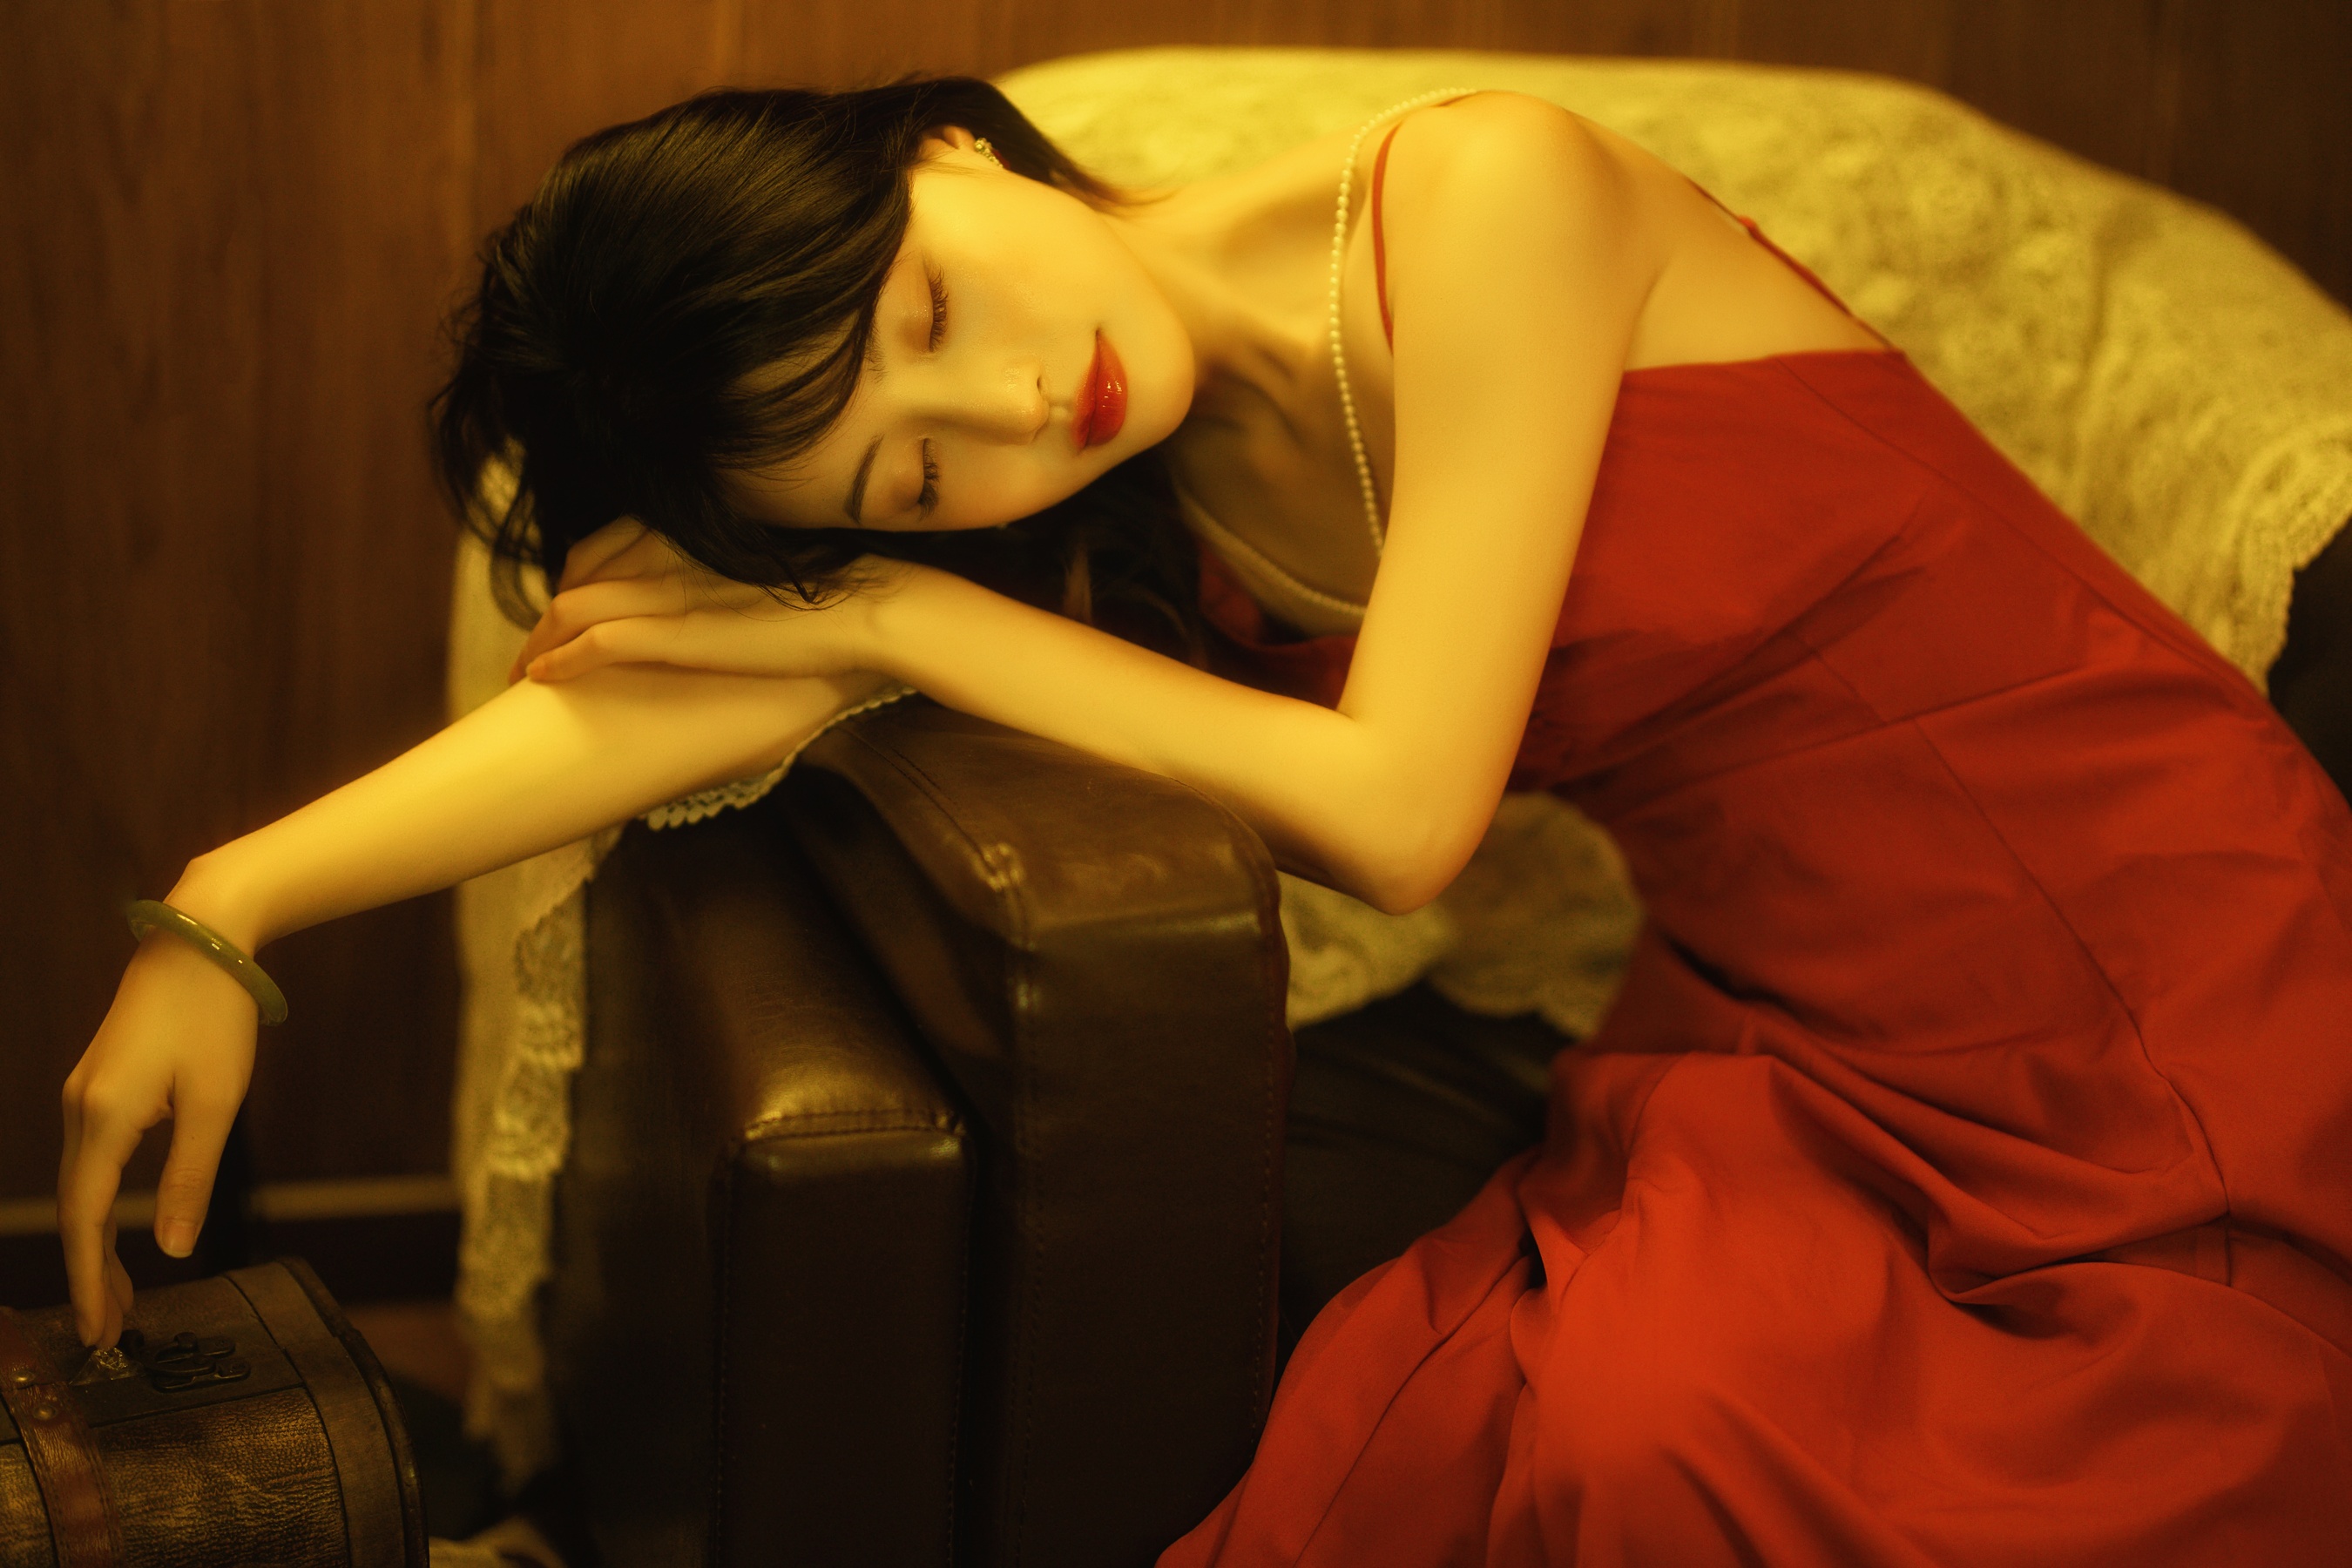 People 2700x1800 women Asian Chinese model dark hair red dress women indoors closed eyes resting head